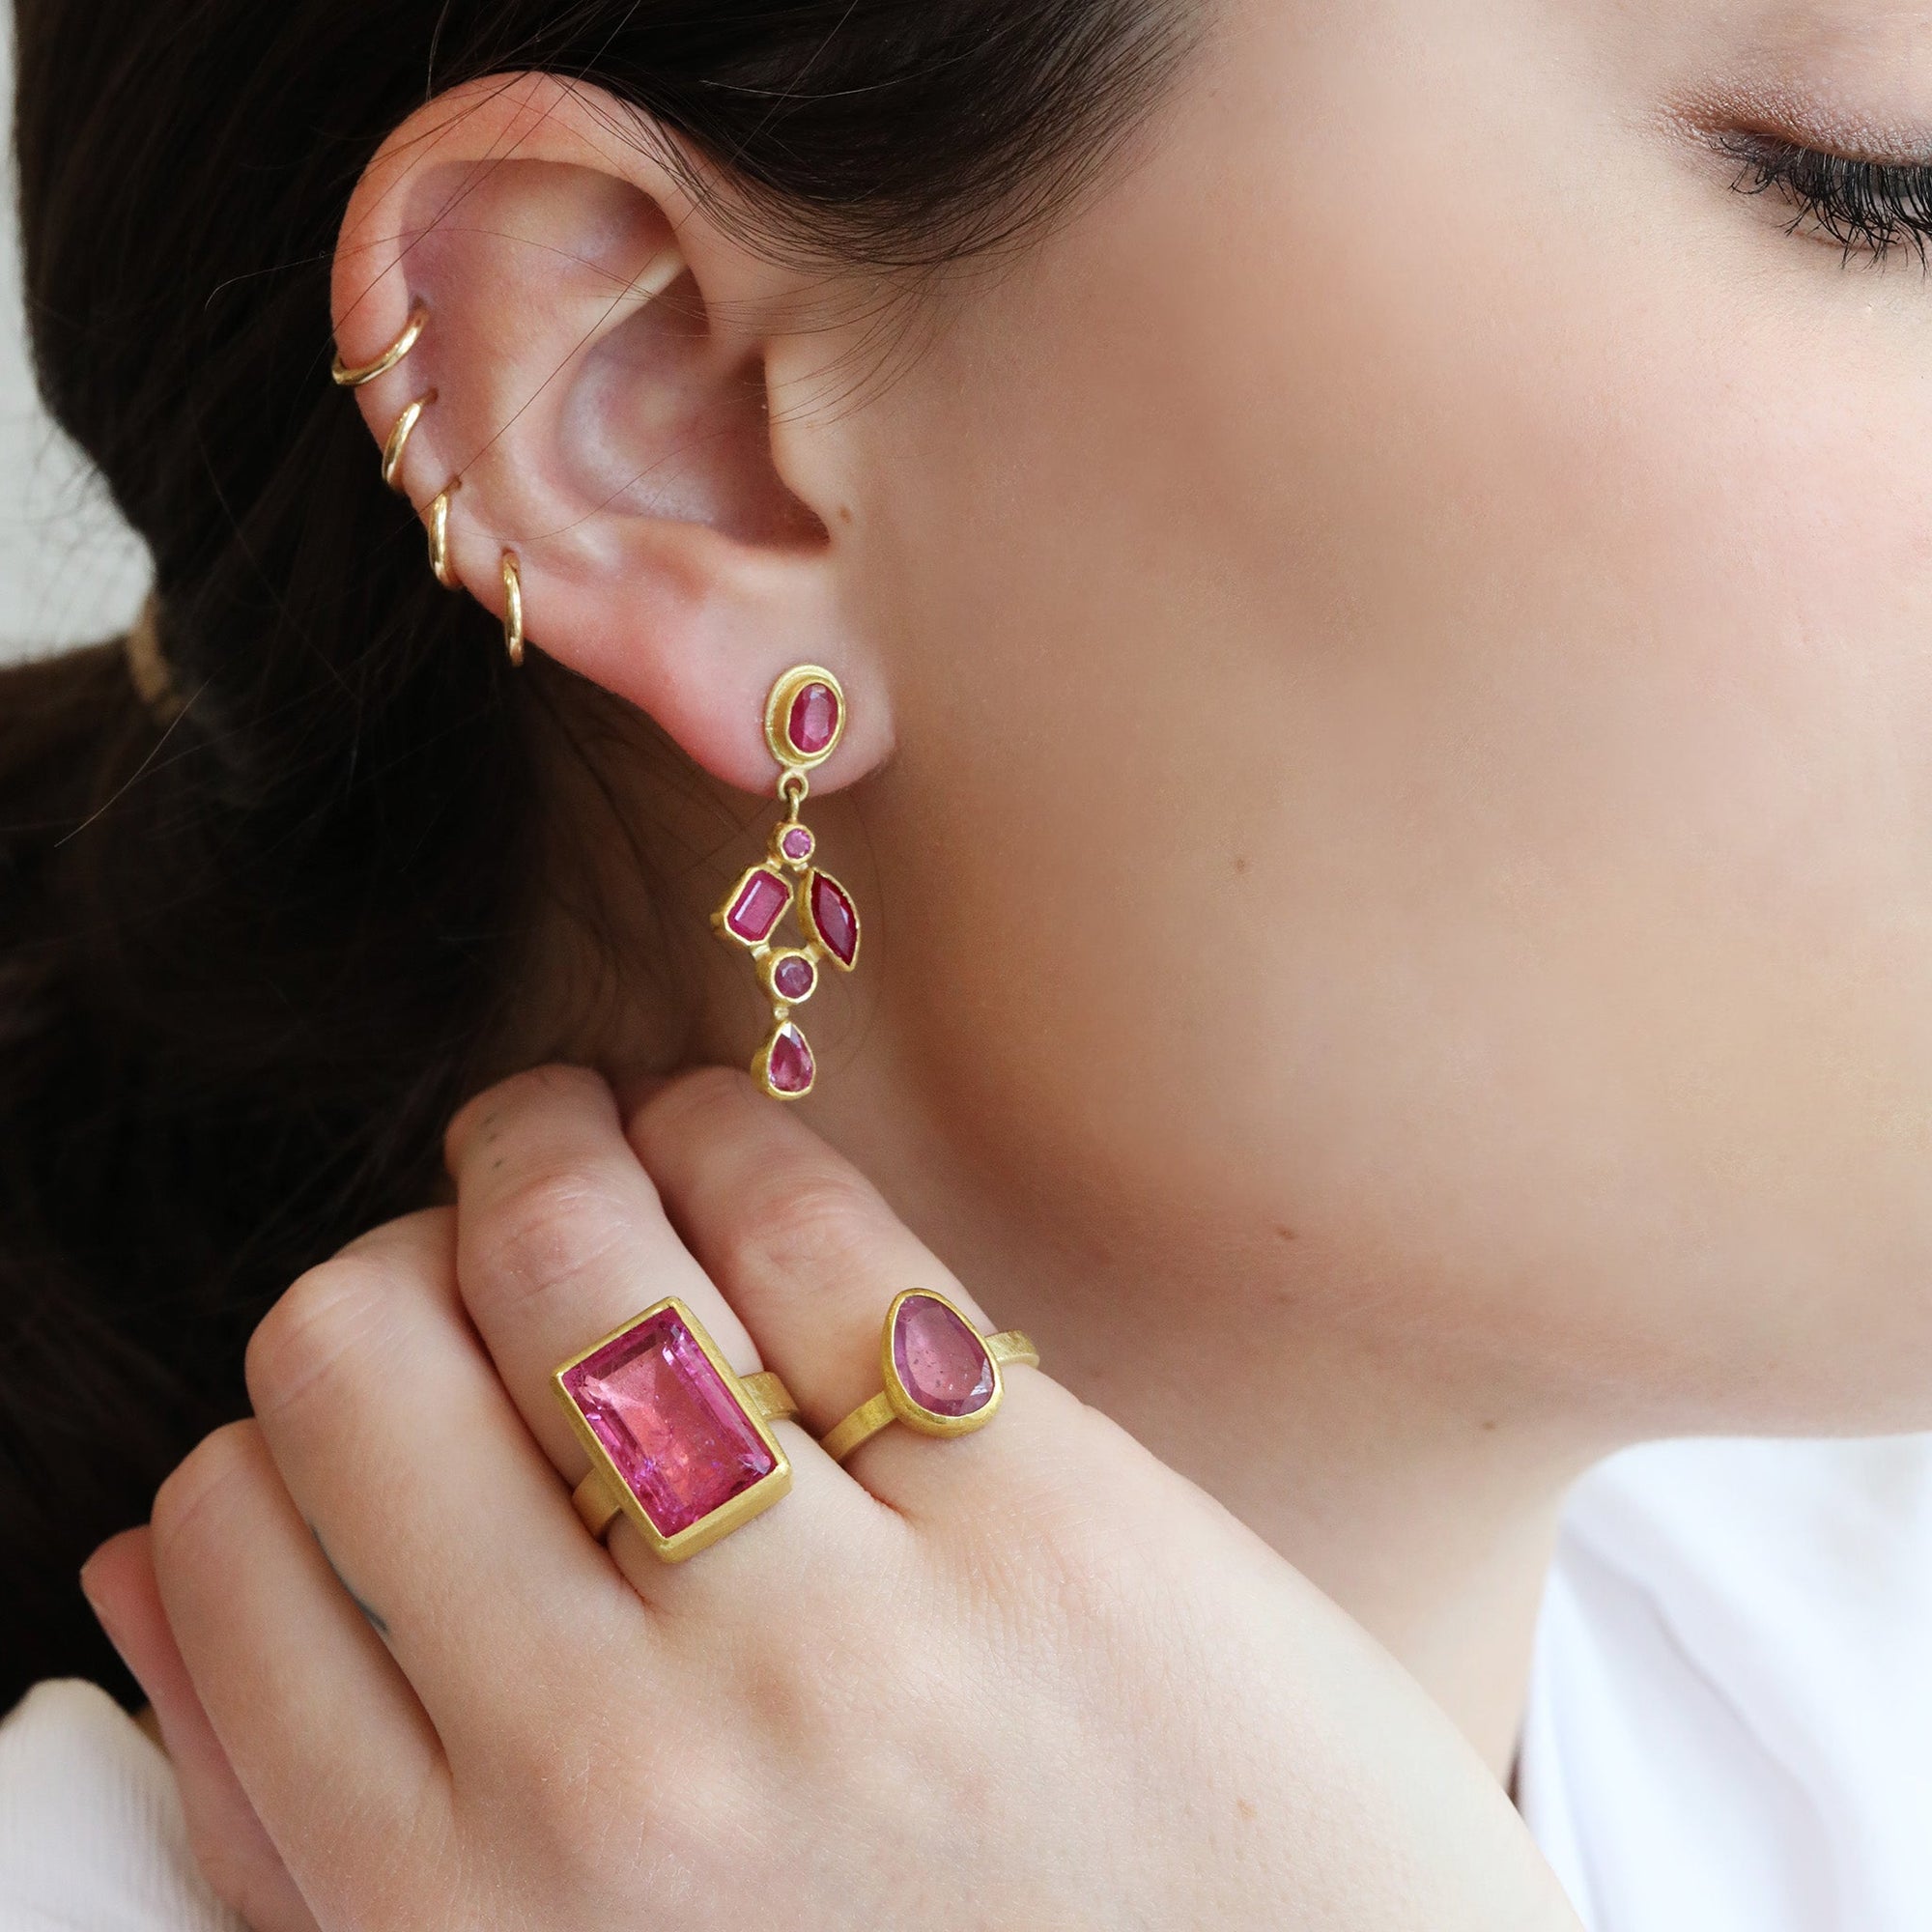 22K &amp; 18K Gold Irregular Faceted Pink Sapphire Ring - Peridot Fine Jewelry - Petra Class